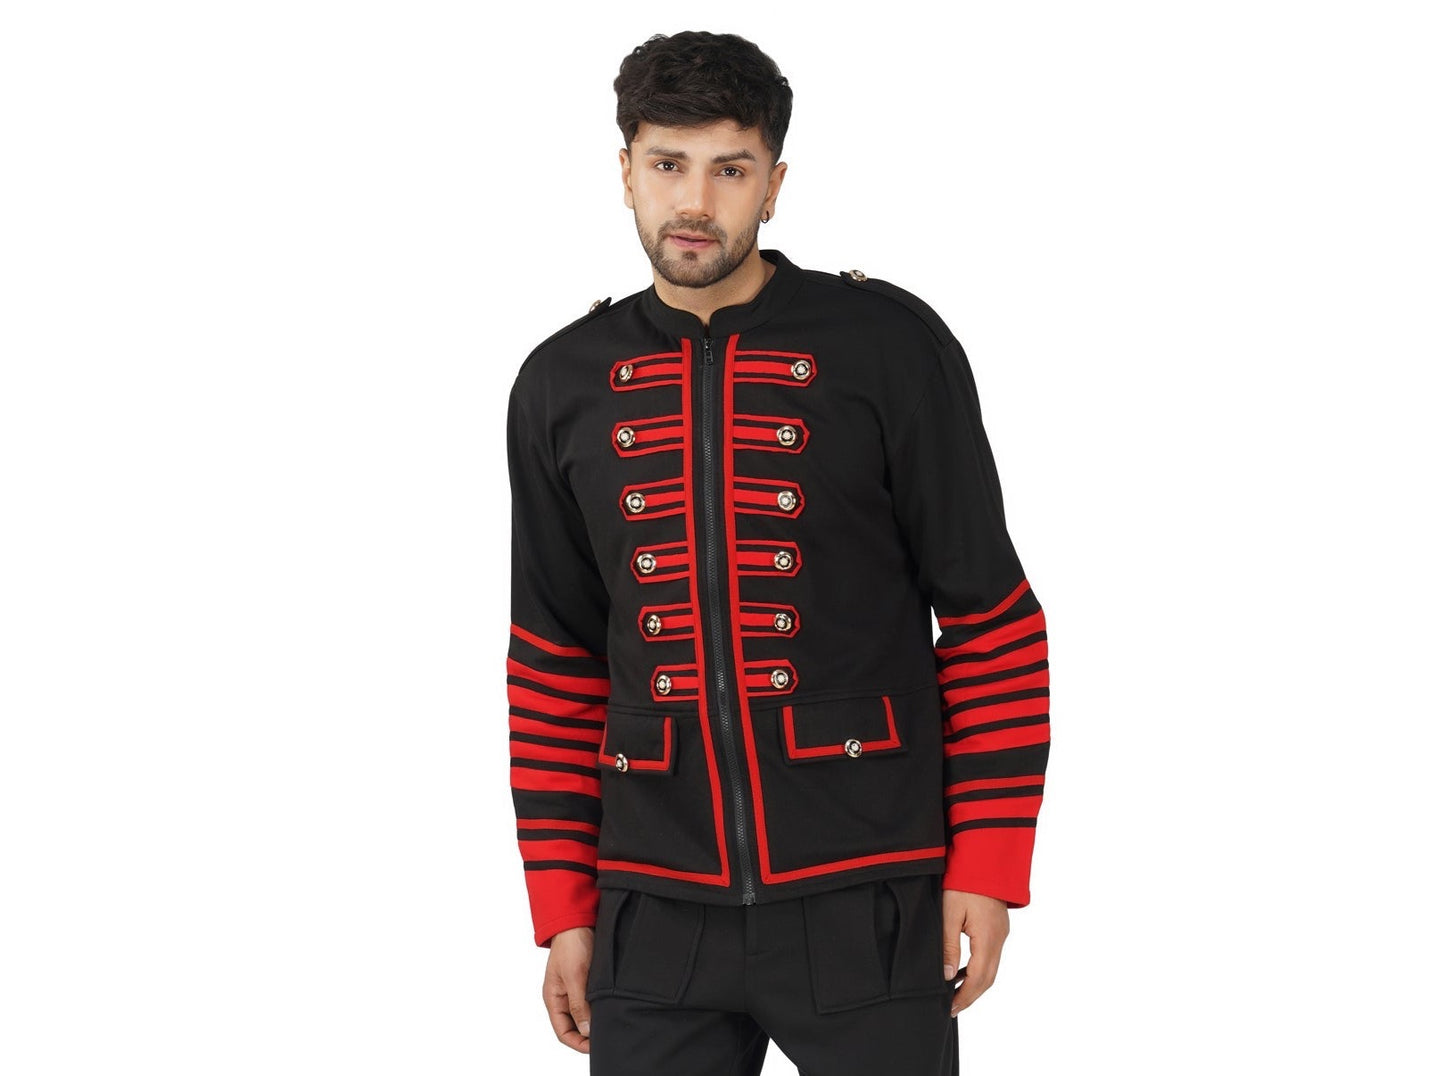 SLAY. Men's Gothic Steampunk Military Parade Casanova Jacket Cardigan Tunic Rock Army Outwear